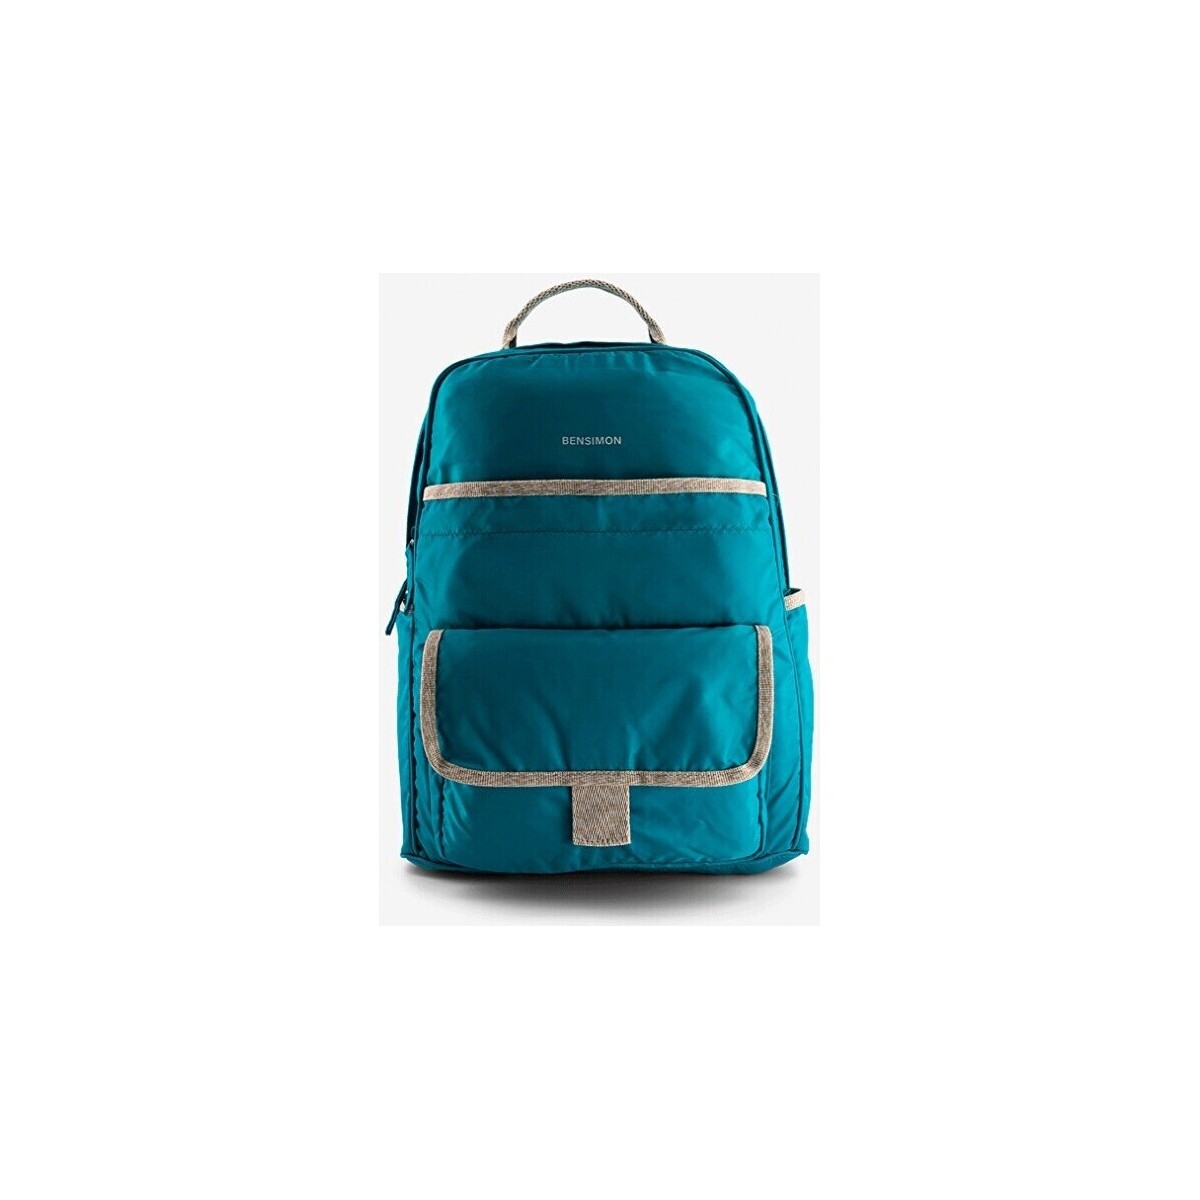 Sacs Homme Sacs Bensimon Backpack Azur Multicolore